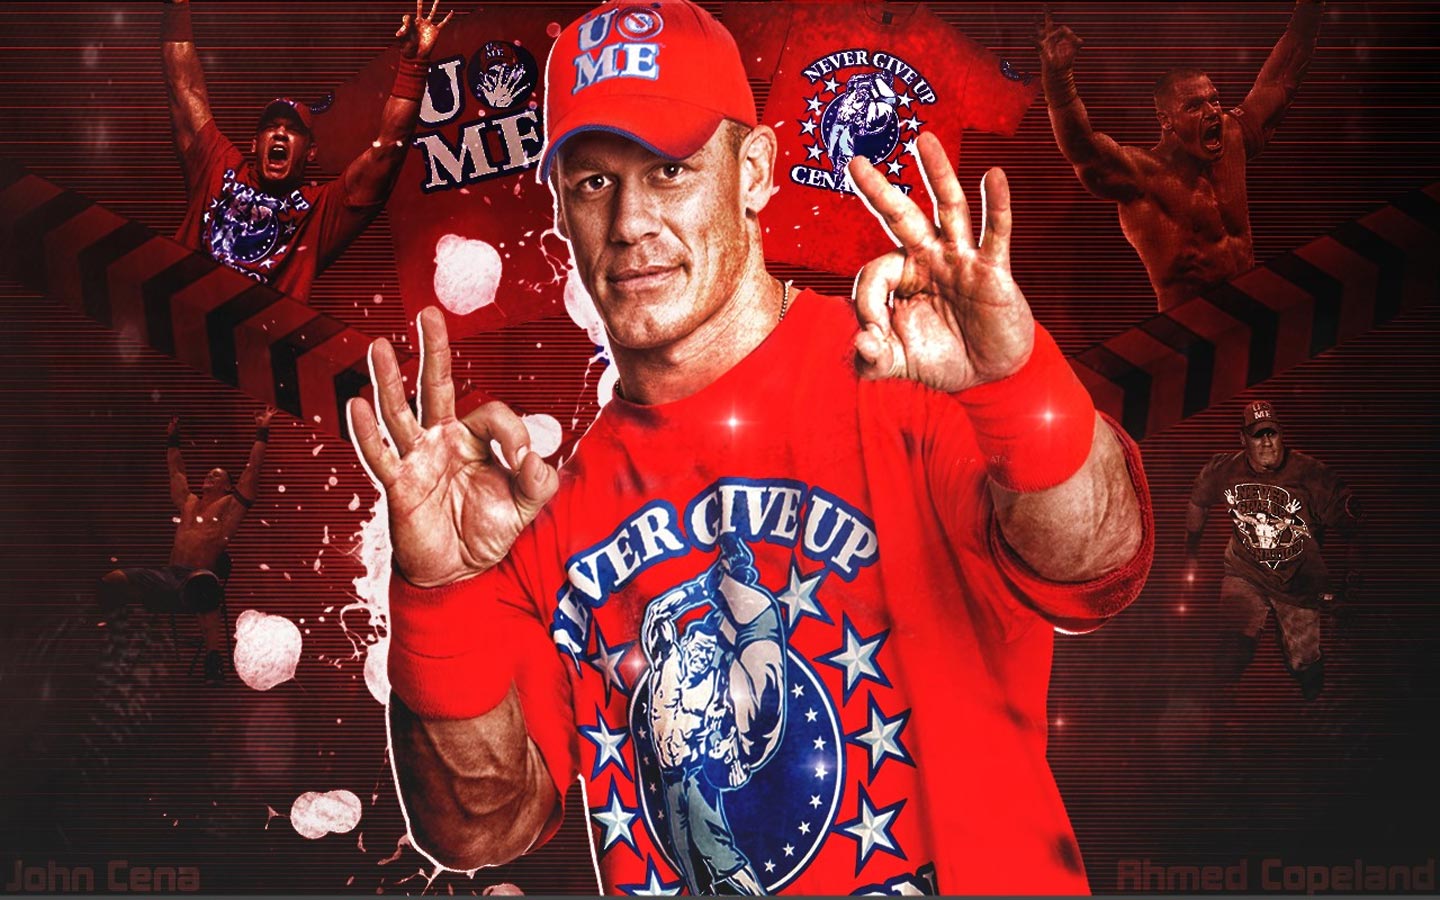 2 X WWE John Cena USA Wrestling Raw Royal Rumble Smack Down Title Belt  Wallpaper | eBay